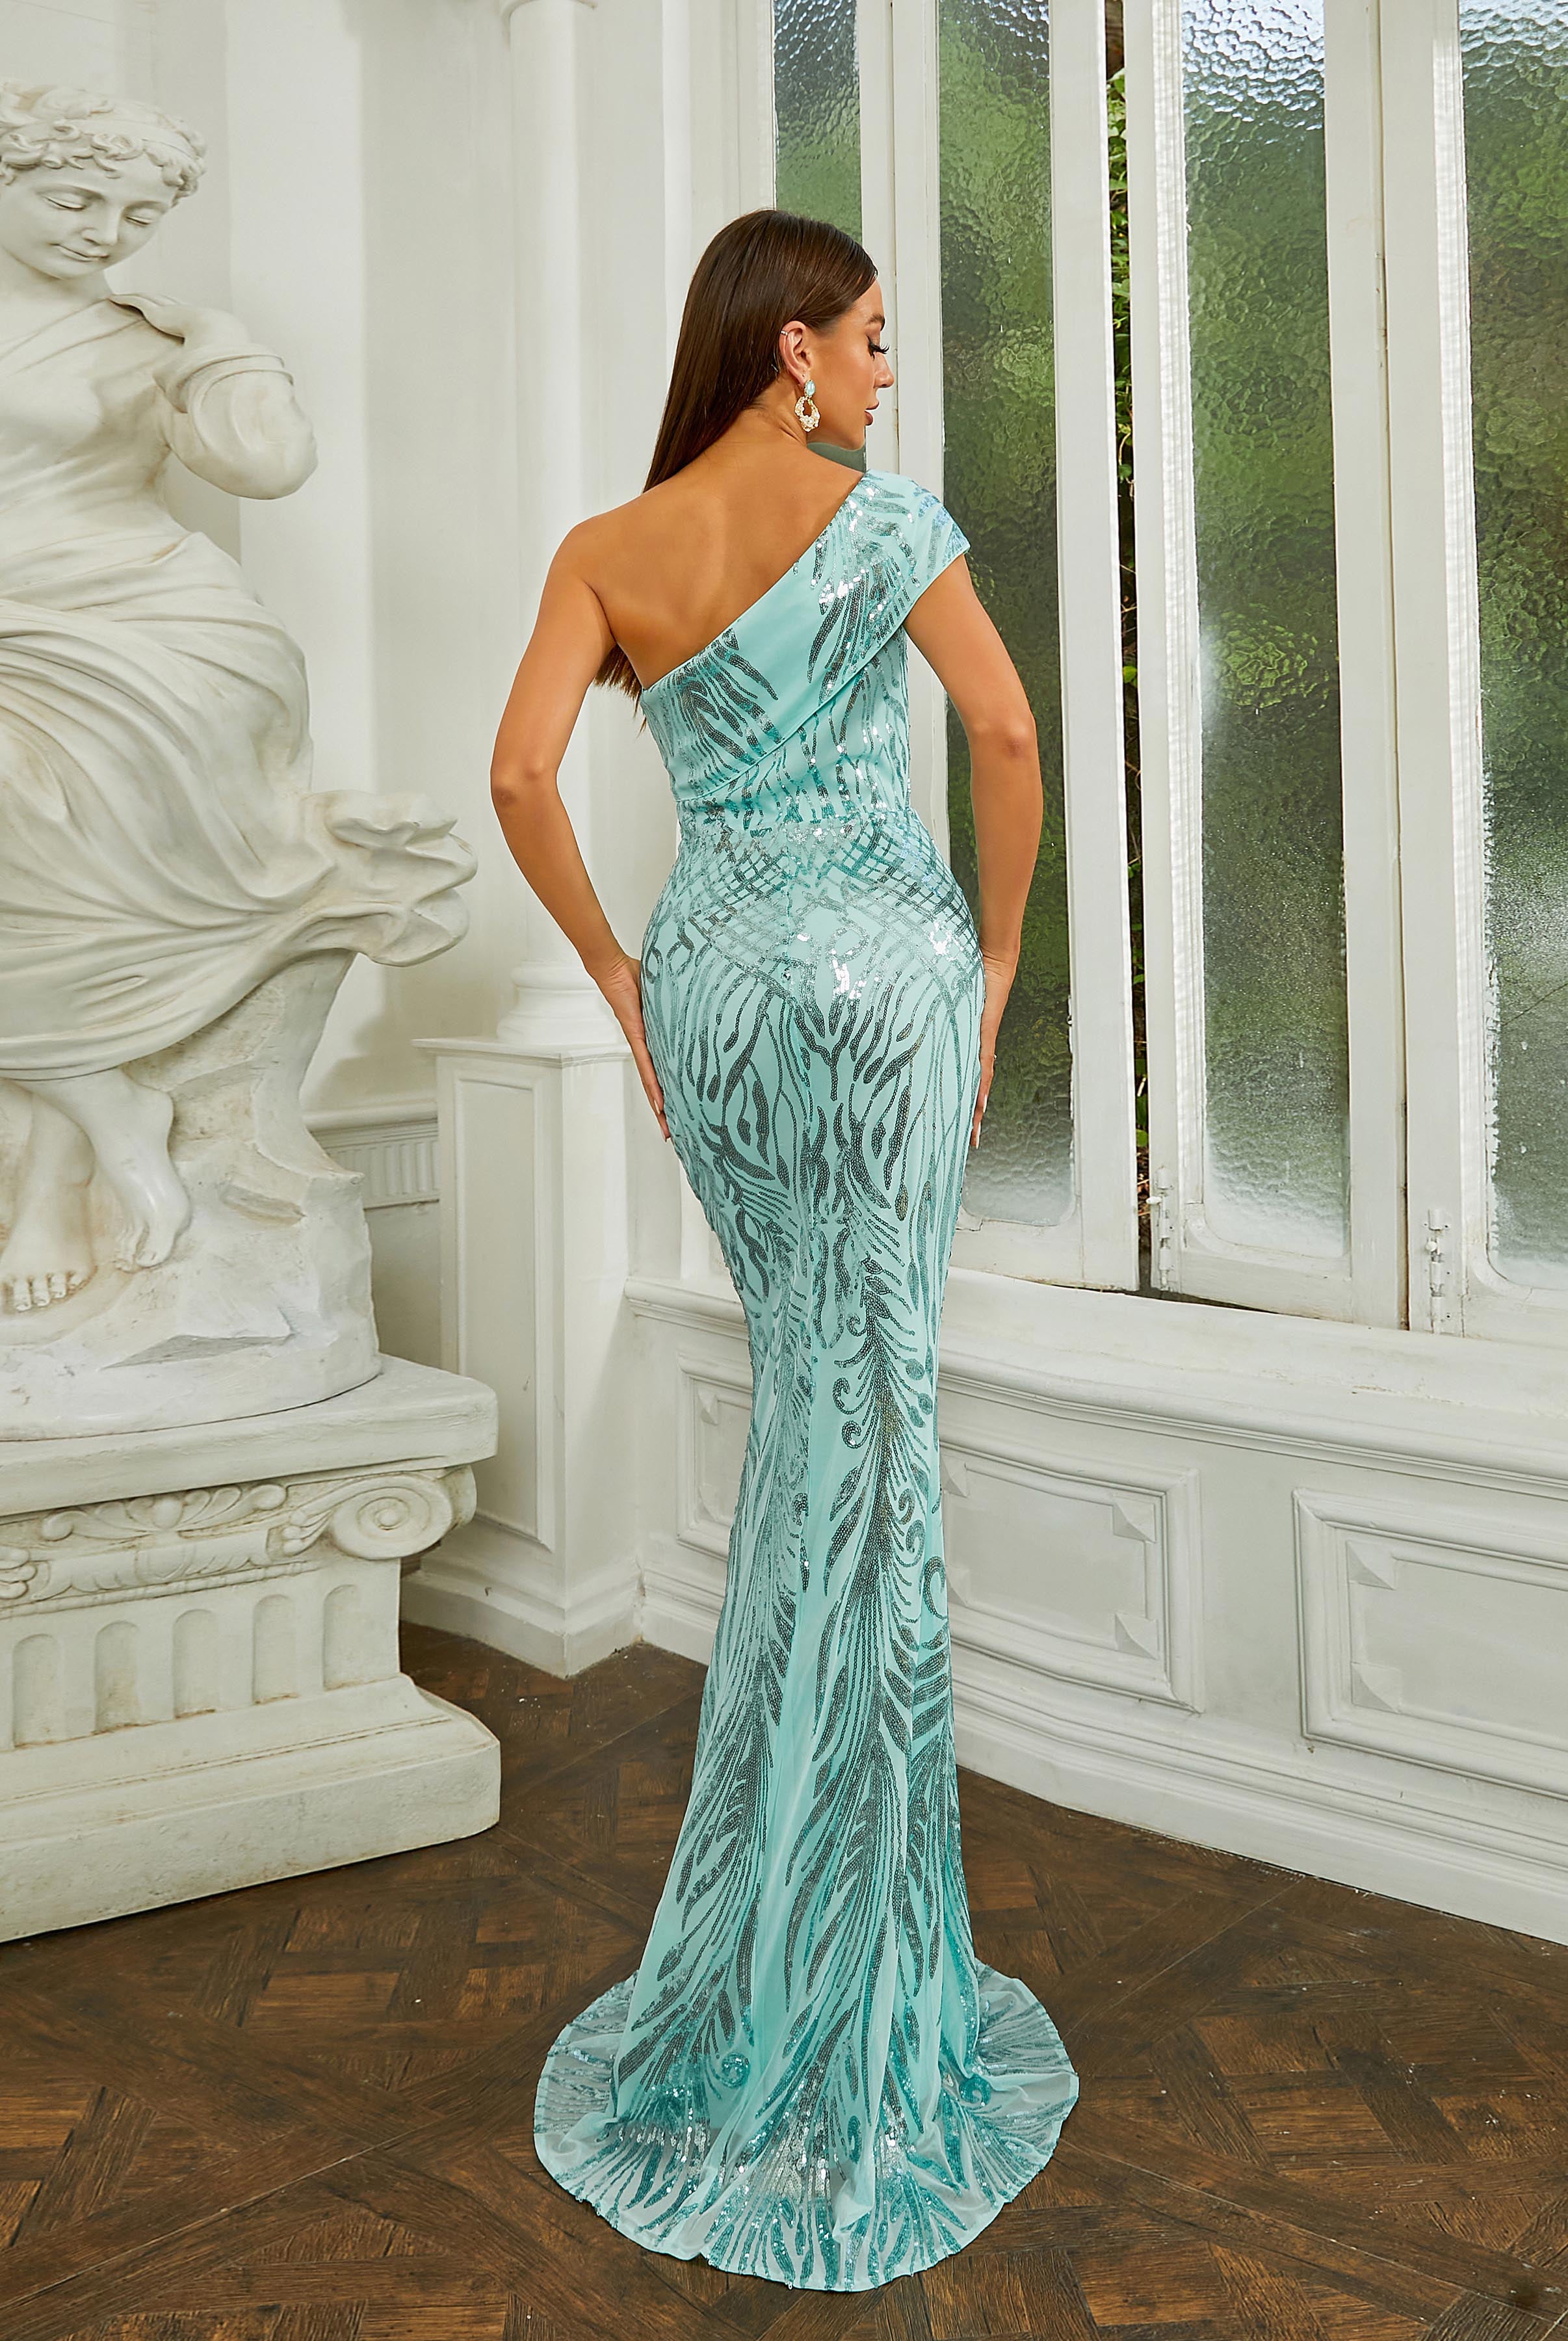 MISSORD One Shoulder Backless Mermaid Sequin Prom Dress